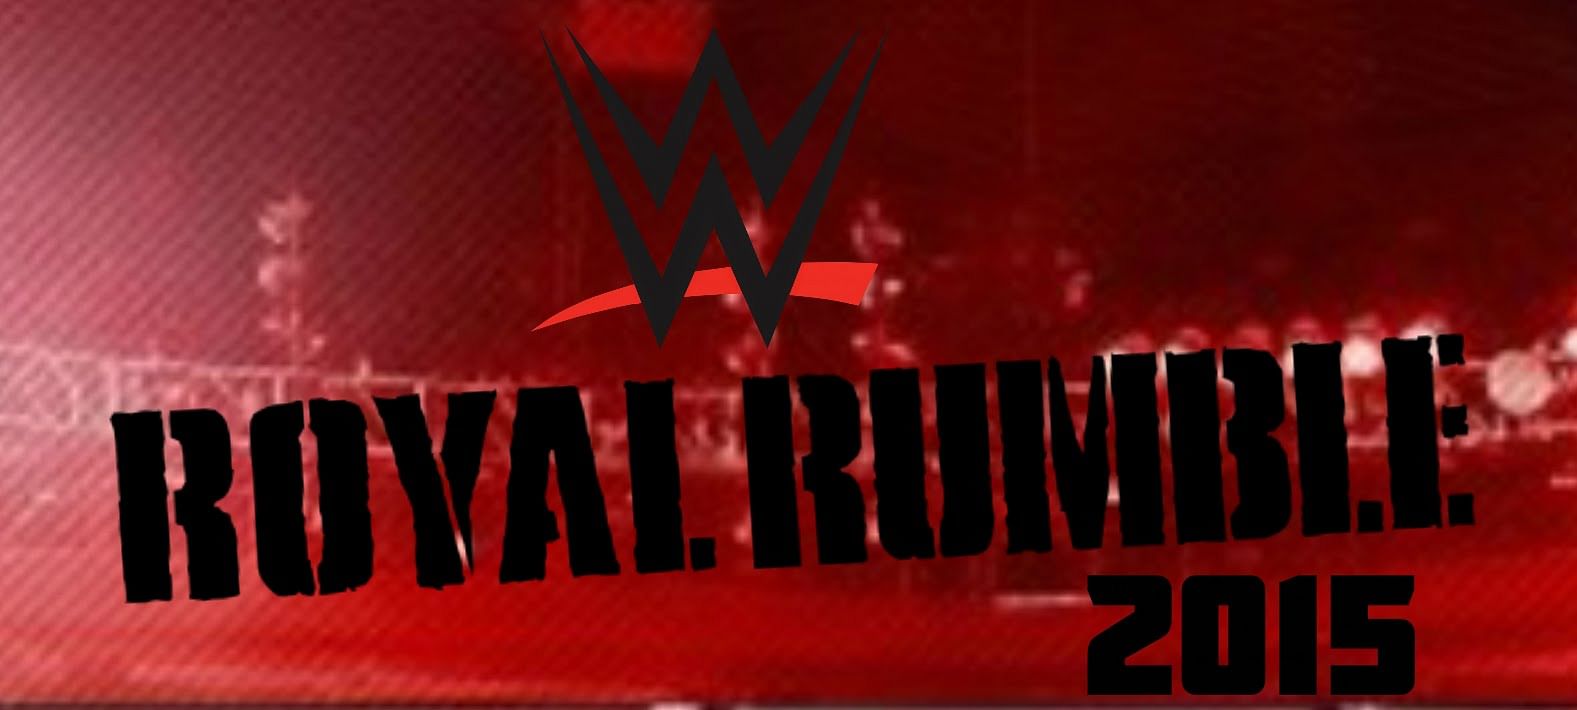 WWE confirm ROYAL RUMBLE 2015 details